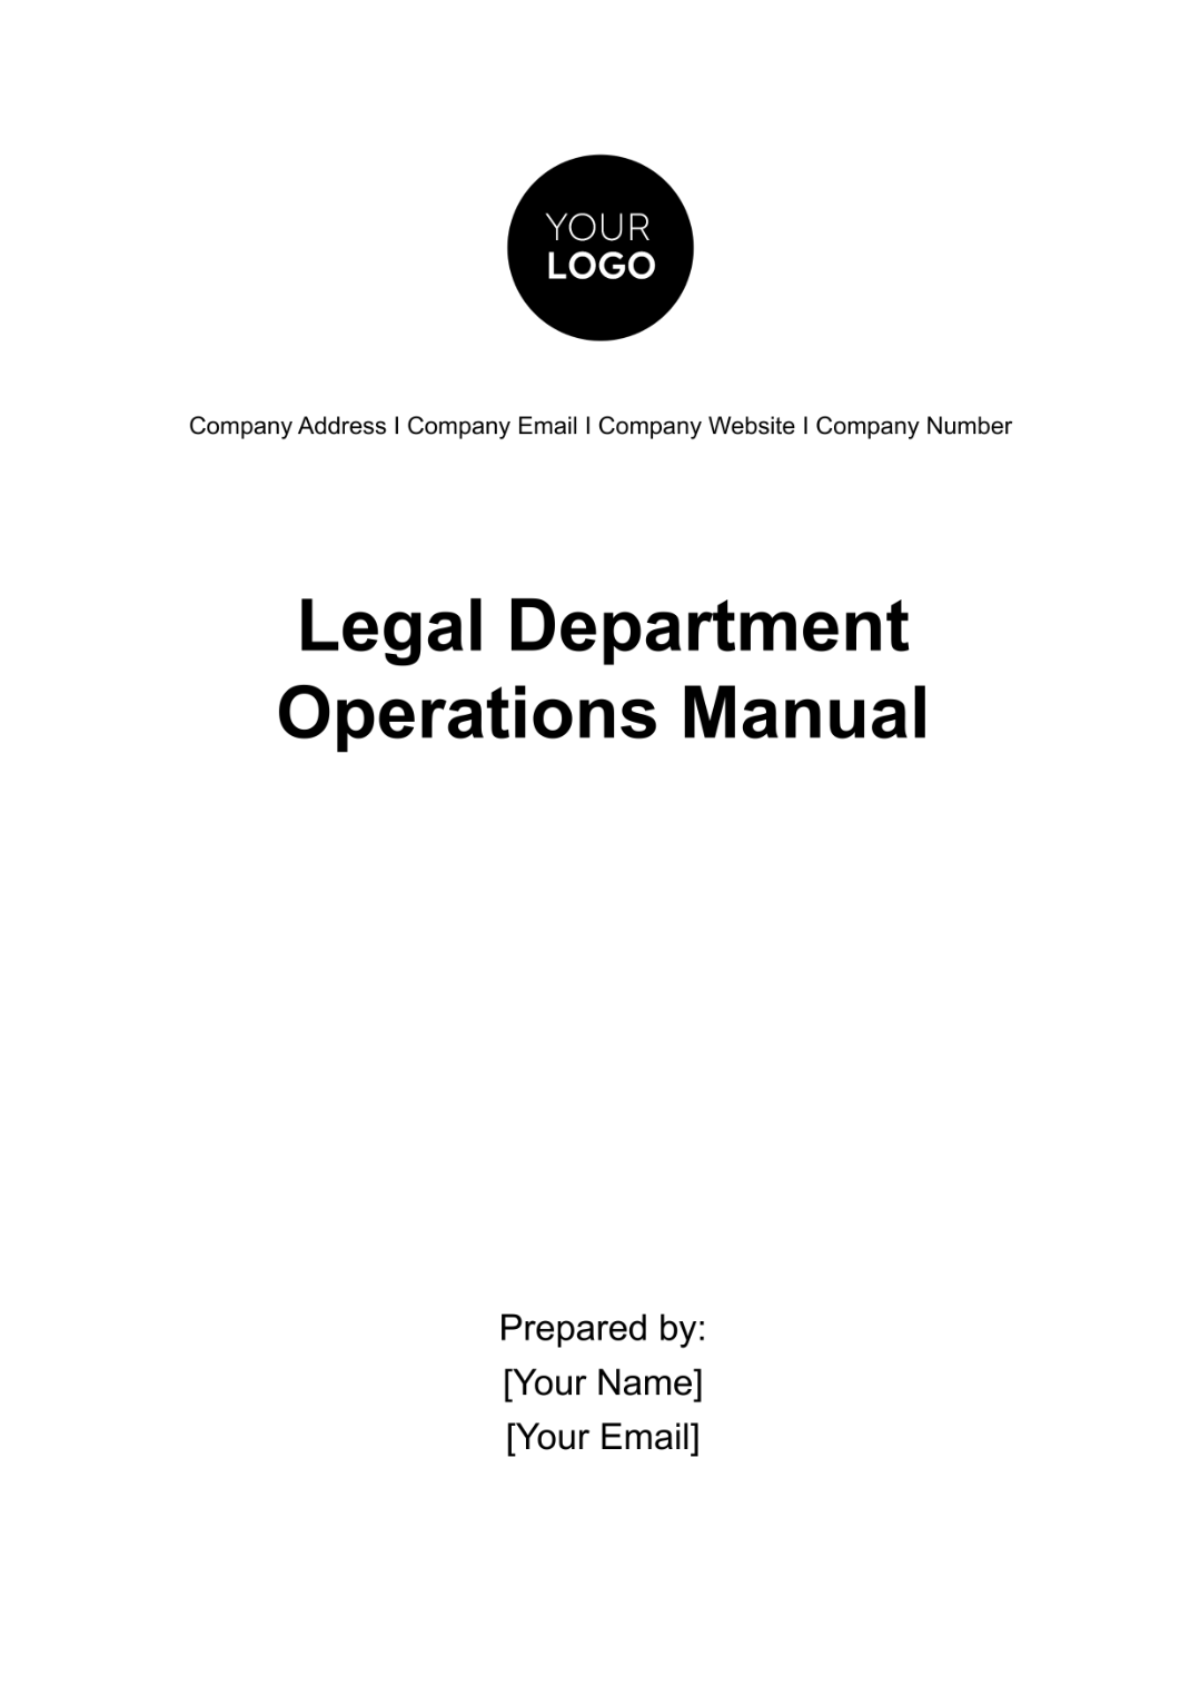 Legal Department Operations Manual Template